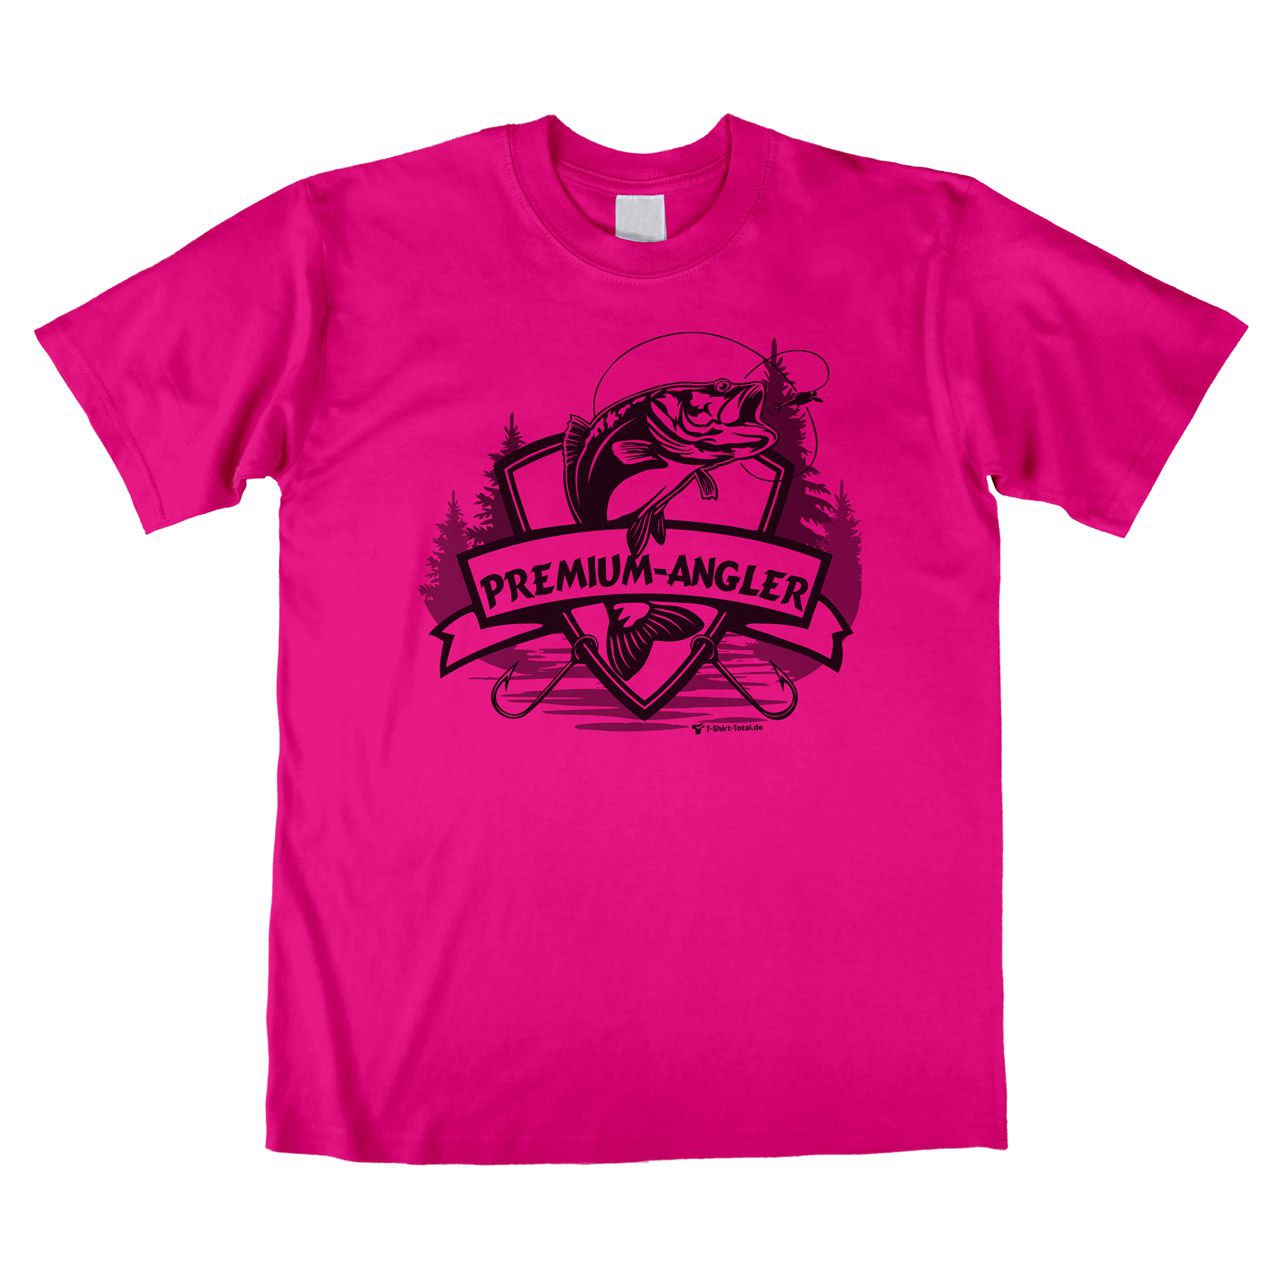 Premium-Angler Unisex T-Shirt pink Extra Large